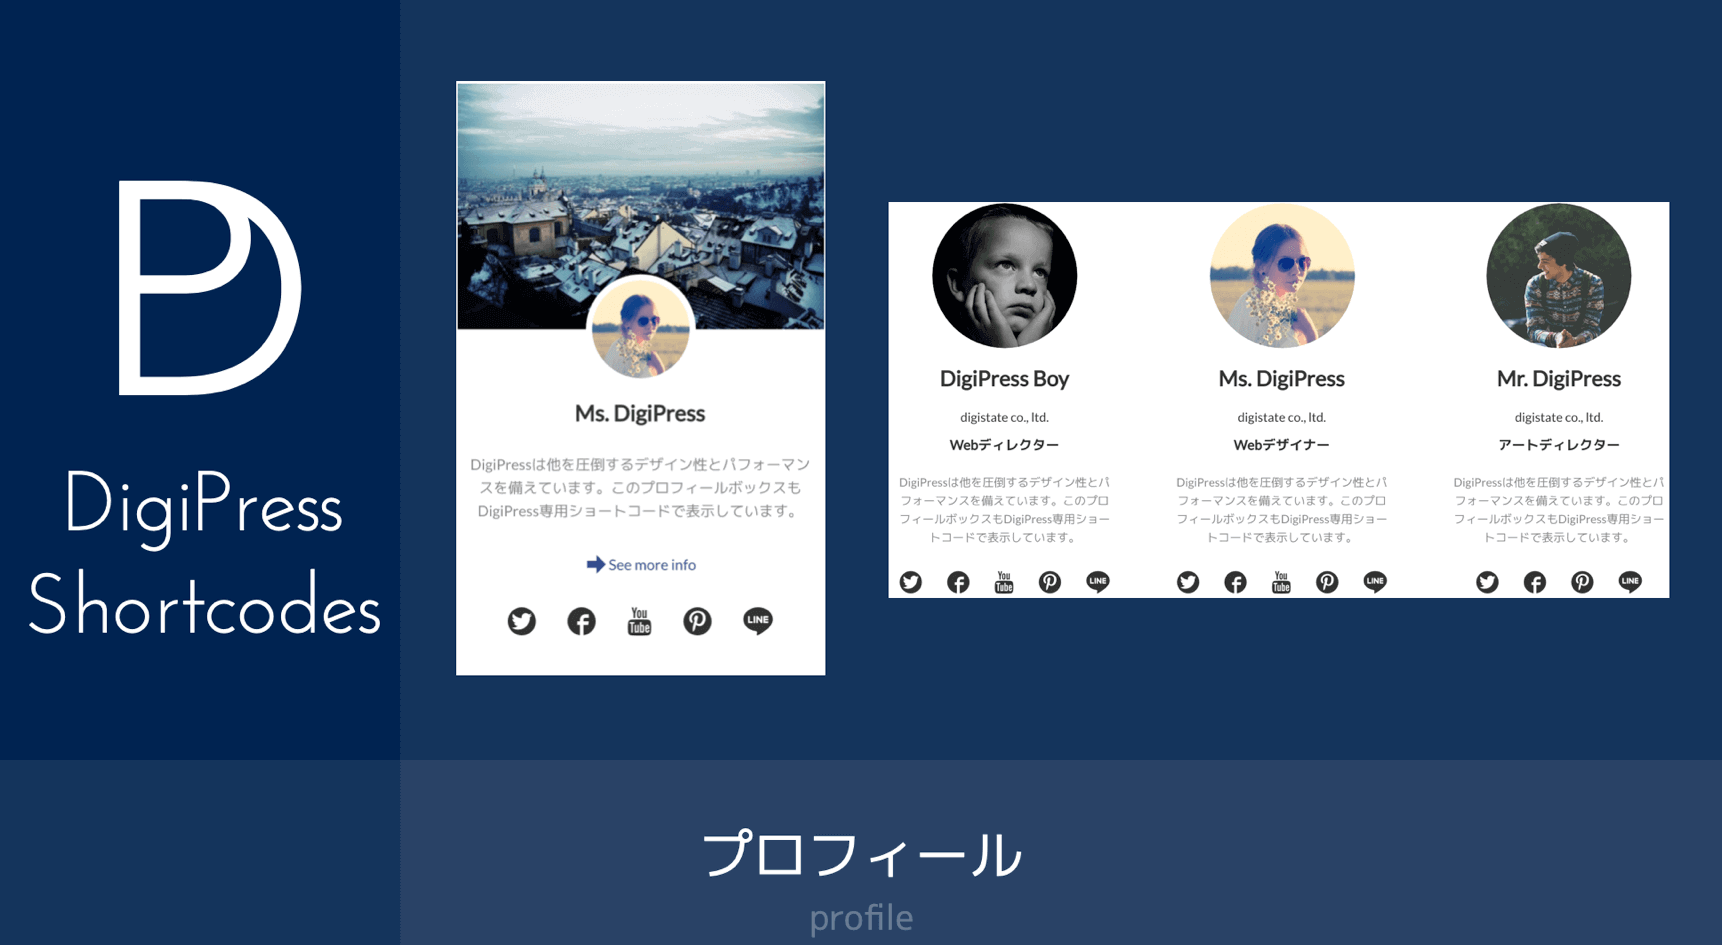 profile : 人物や団体、組織などのプロフィールカードを表示